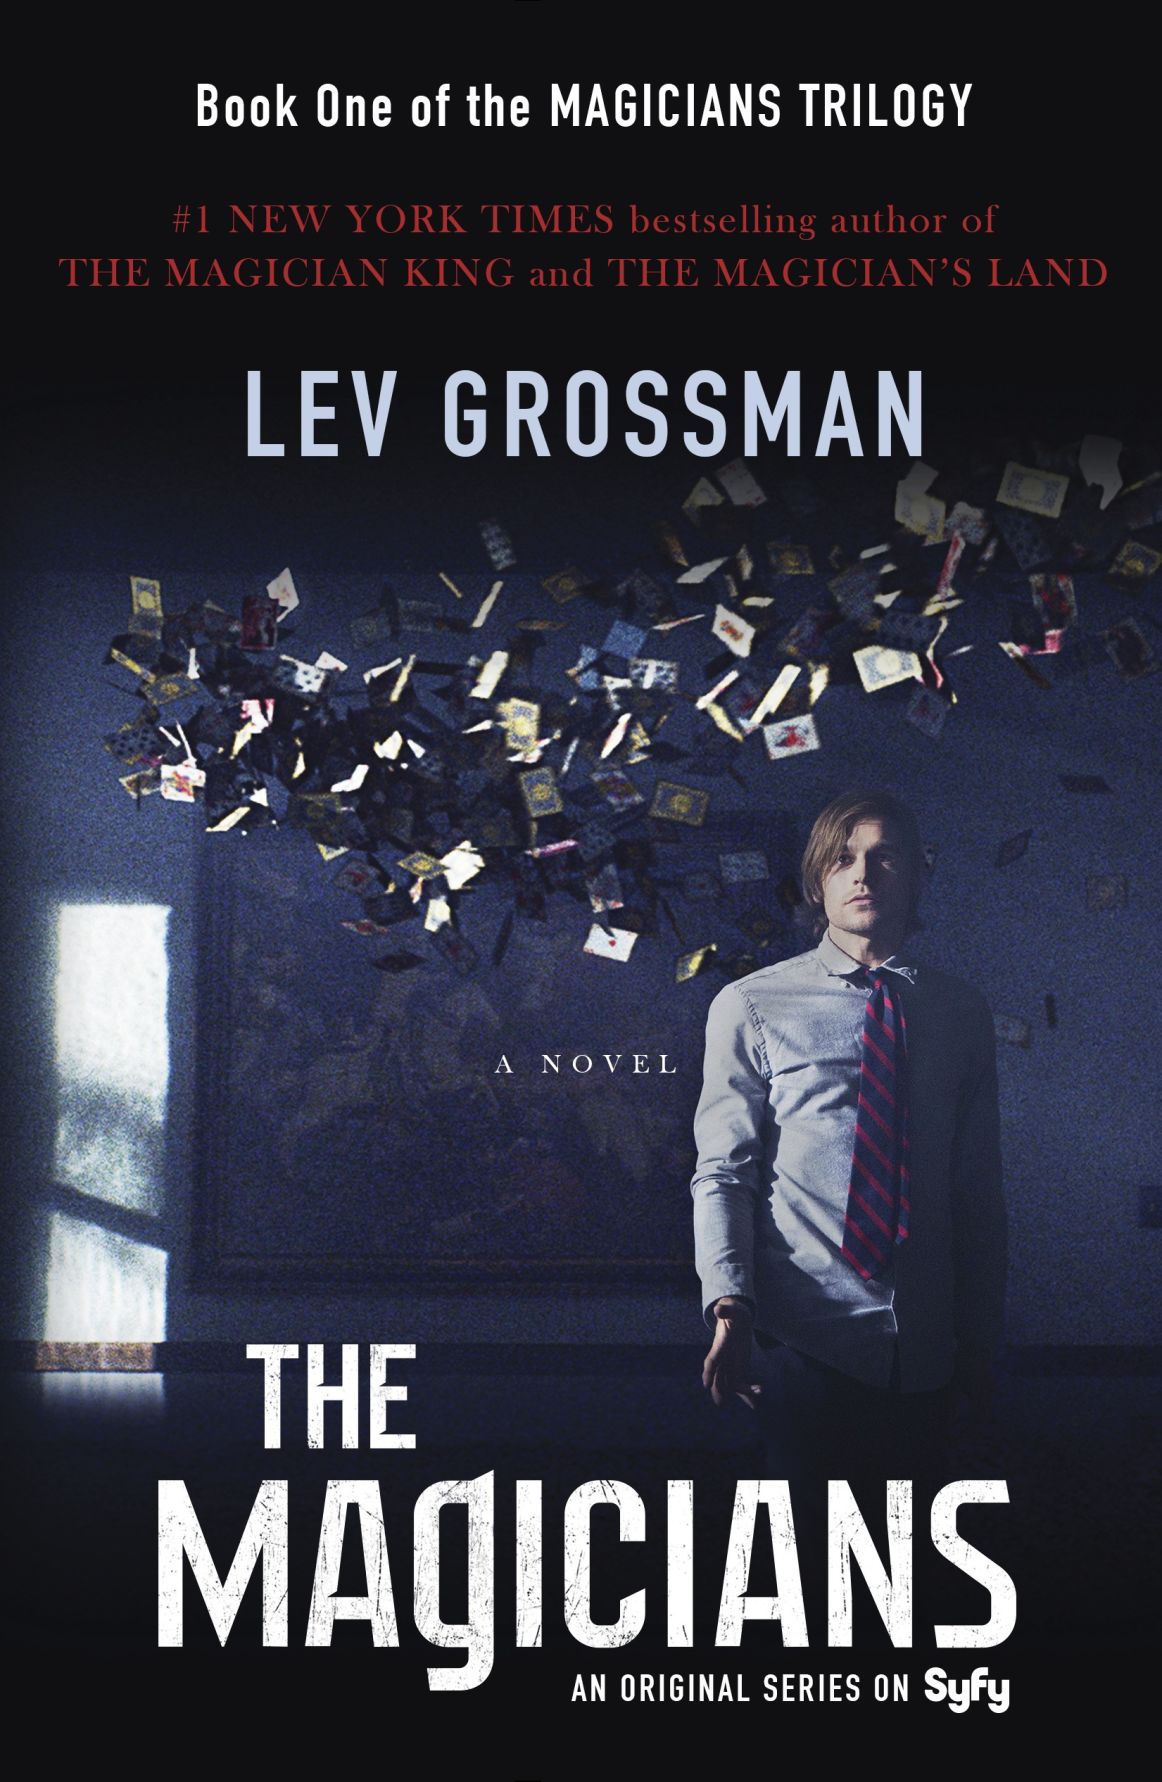 lev grossman the magicians land